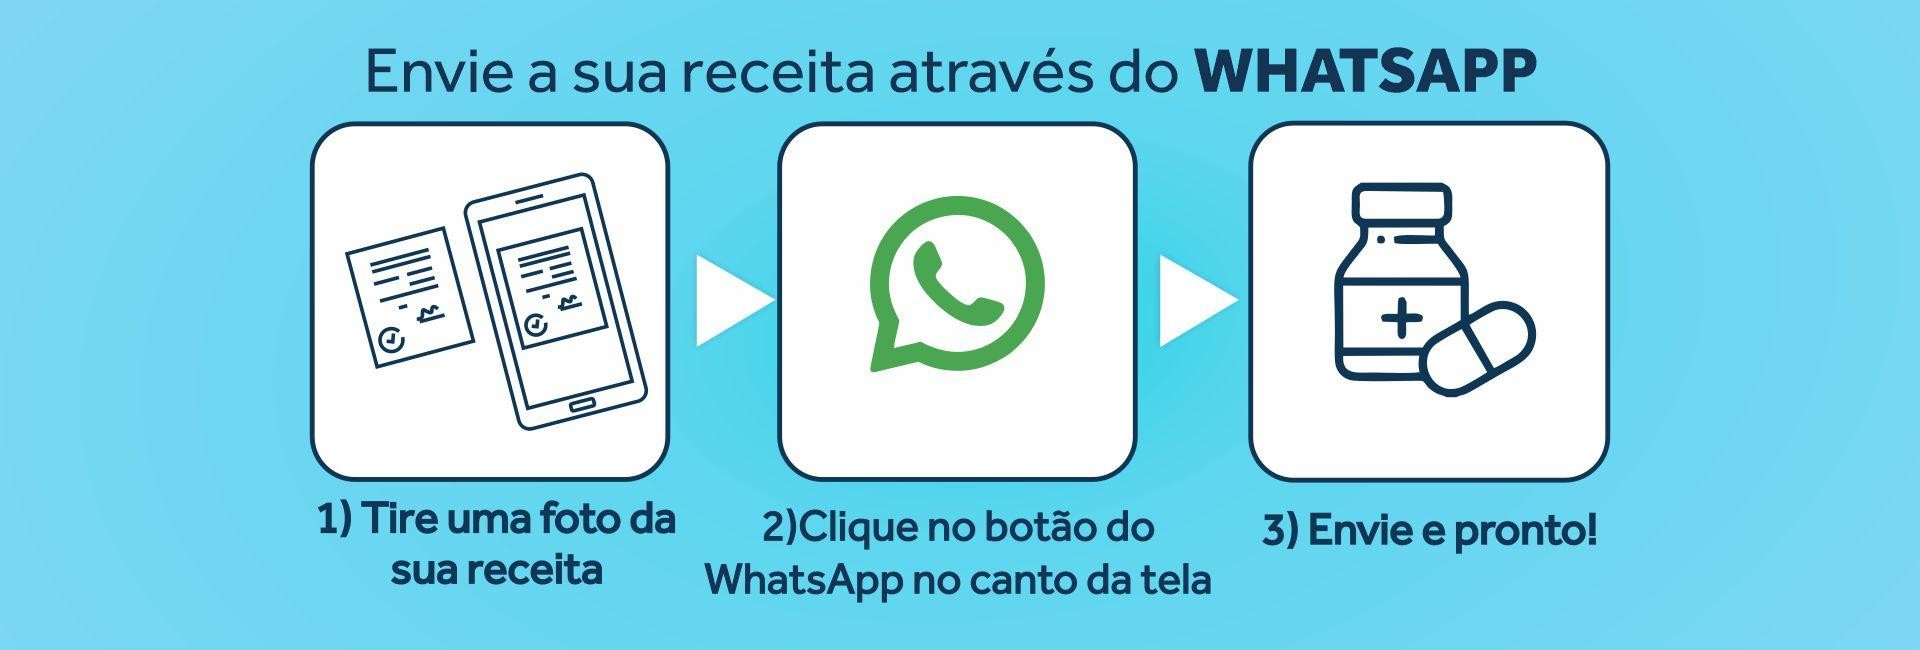 Orçamento pelo Whatsapp